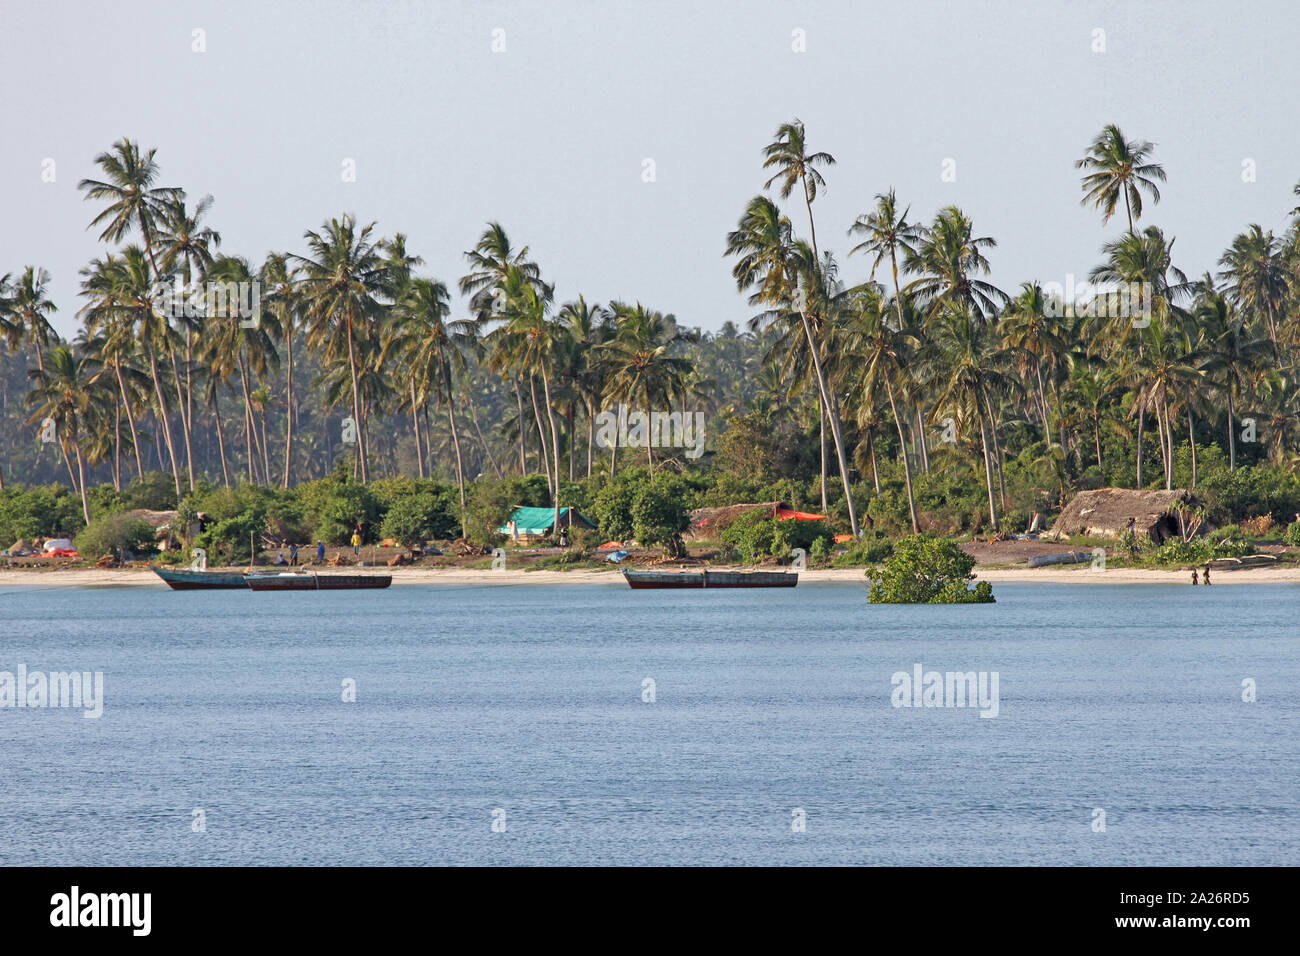 Fishermen's village on the beach and palm trees along the Eastern Coast of Zanzibar, Unguja Island, Tanzania. Stock Photo